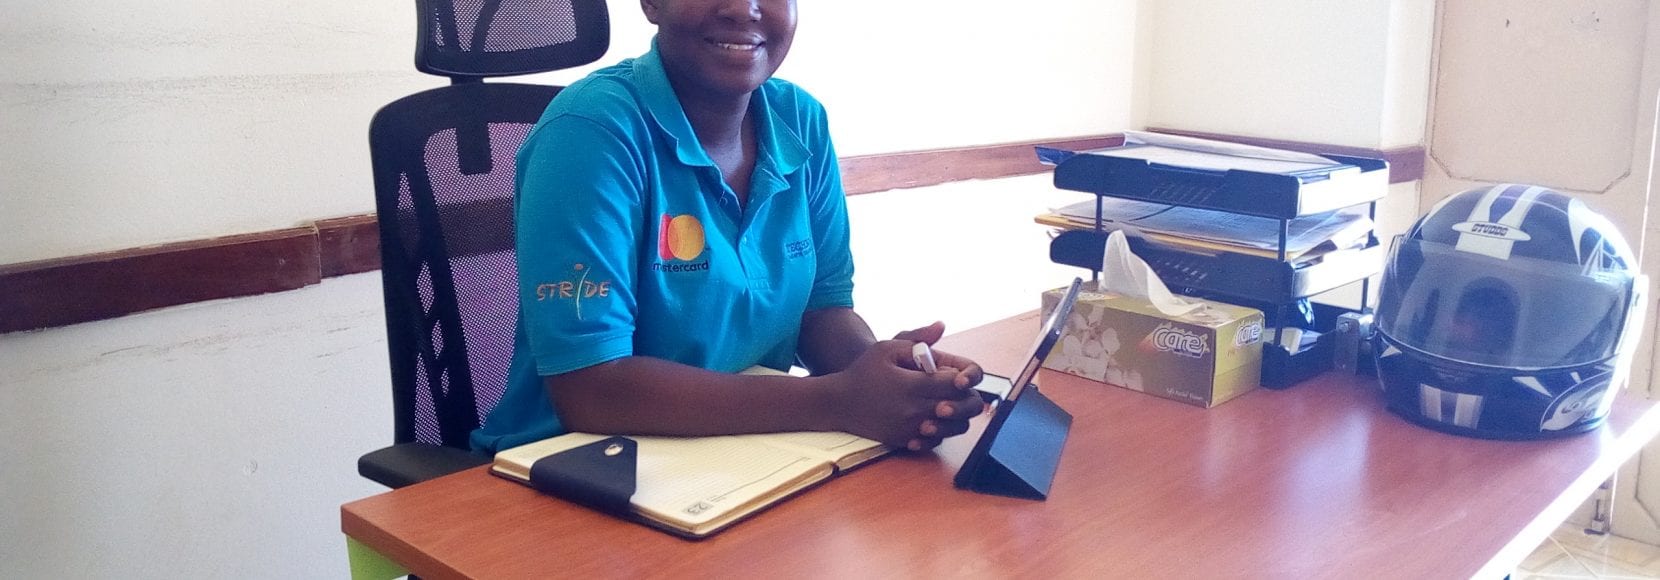 Smiling business woman in Uganda